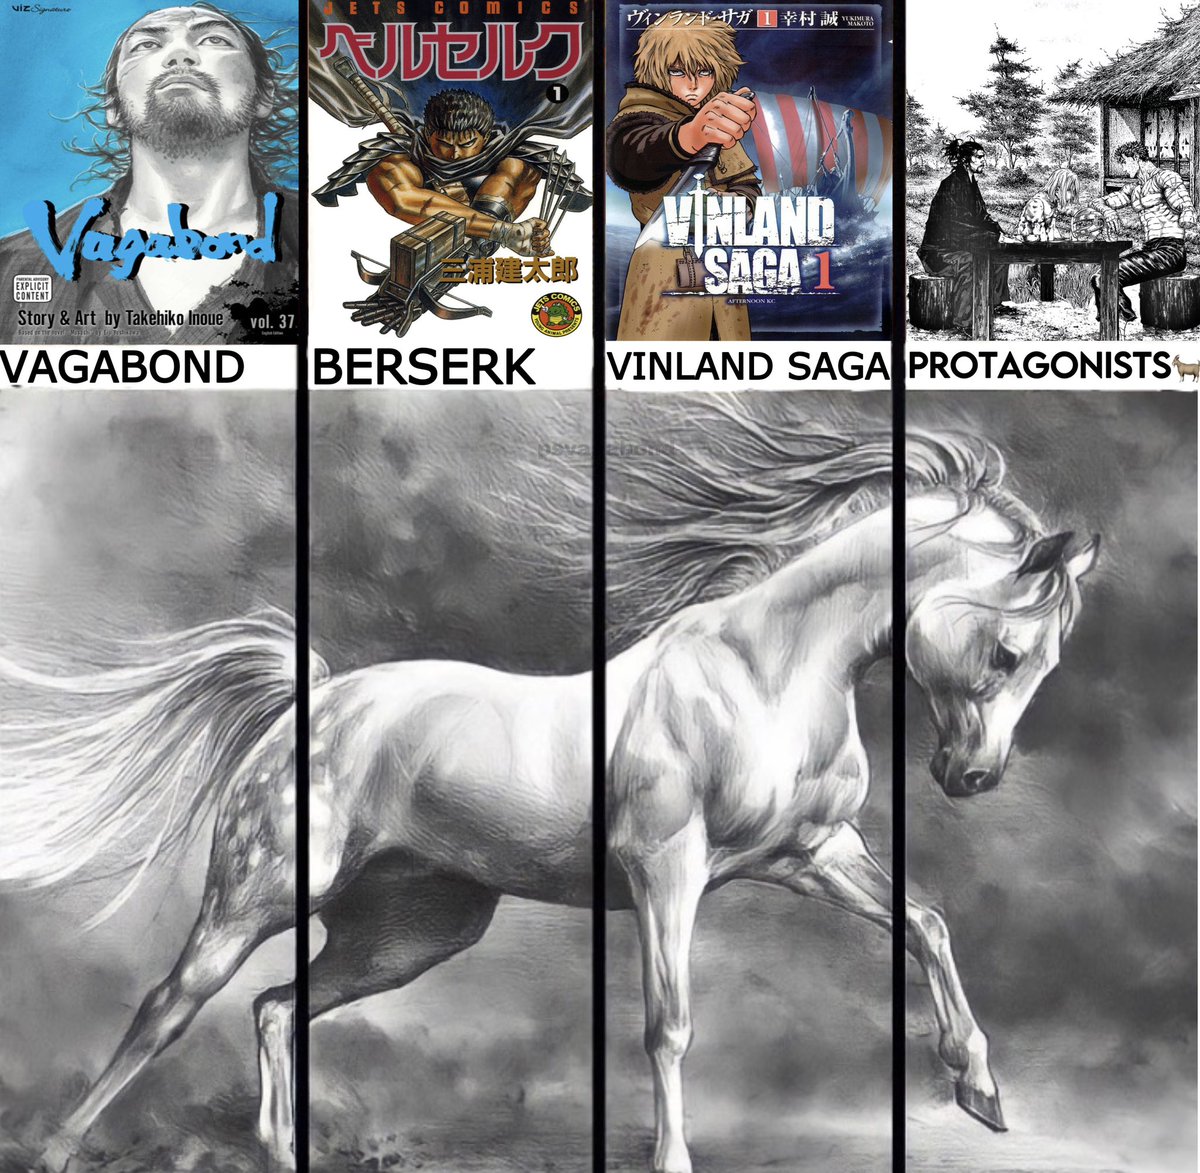 Manga : Vagabond, Berserk & Vinland Saga